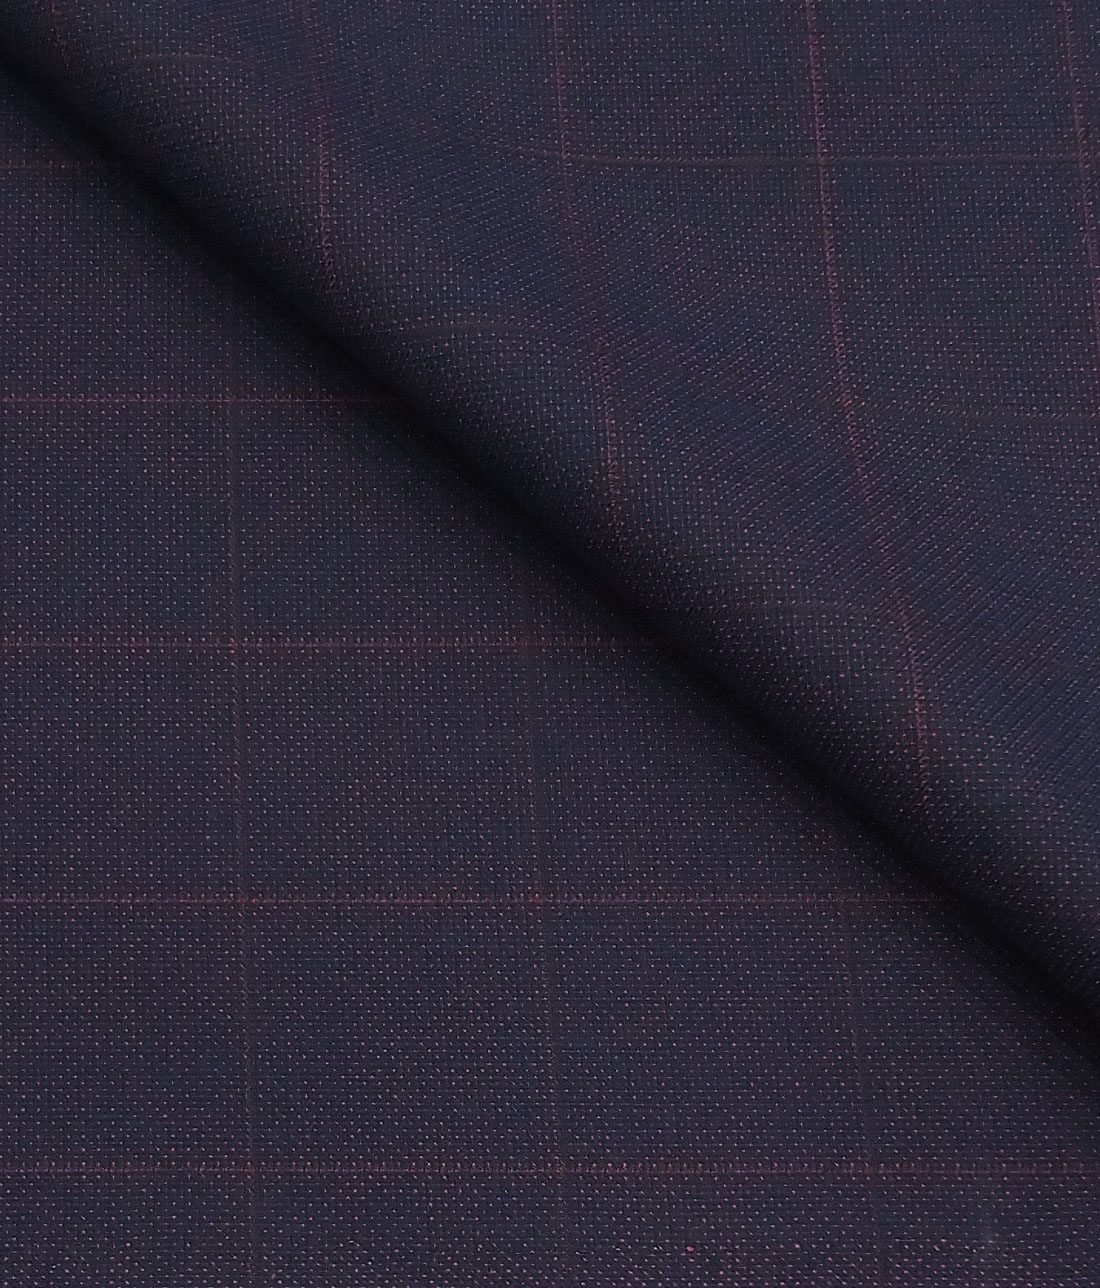 Augustus Dark Purple Structured  Cum Checks Unstitched Terry Rayon Suiting Fabric